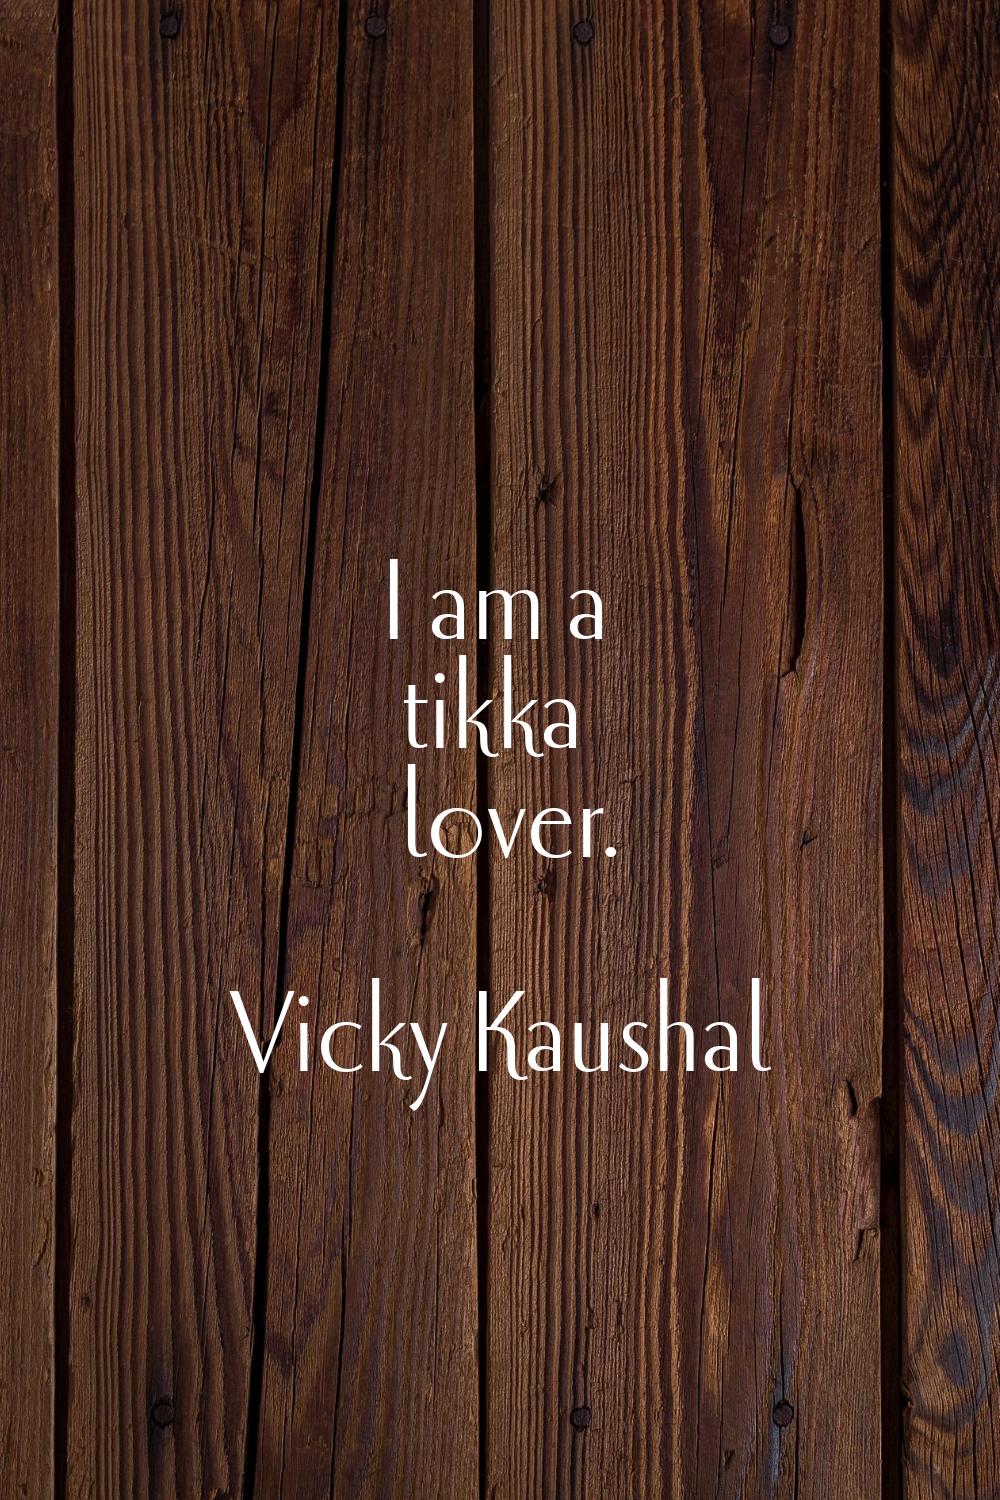 I am a tikka lover.